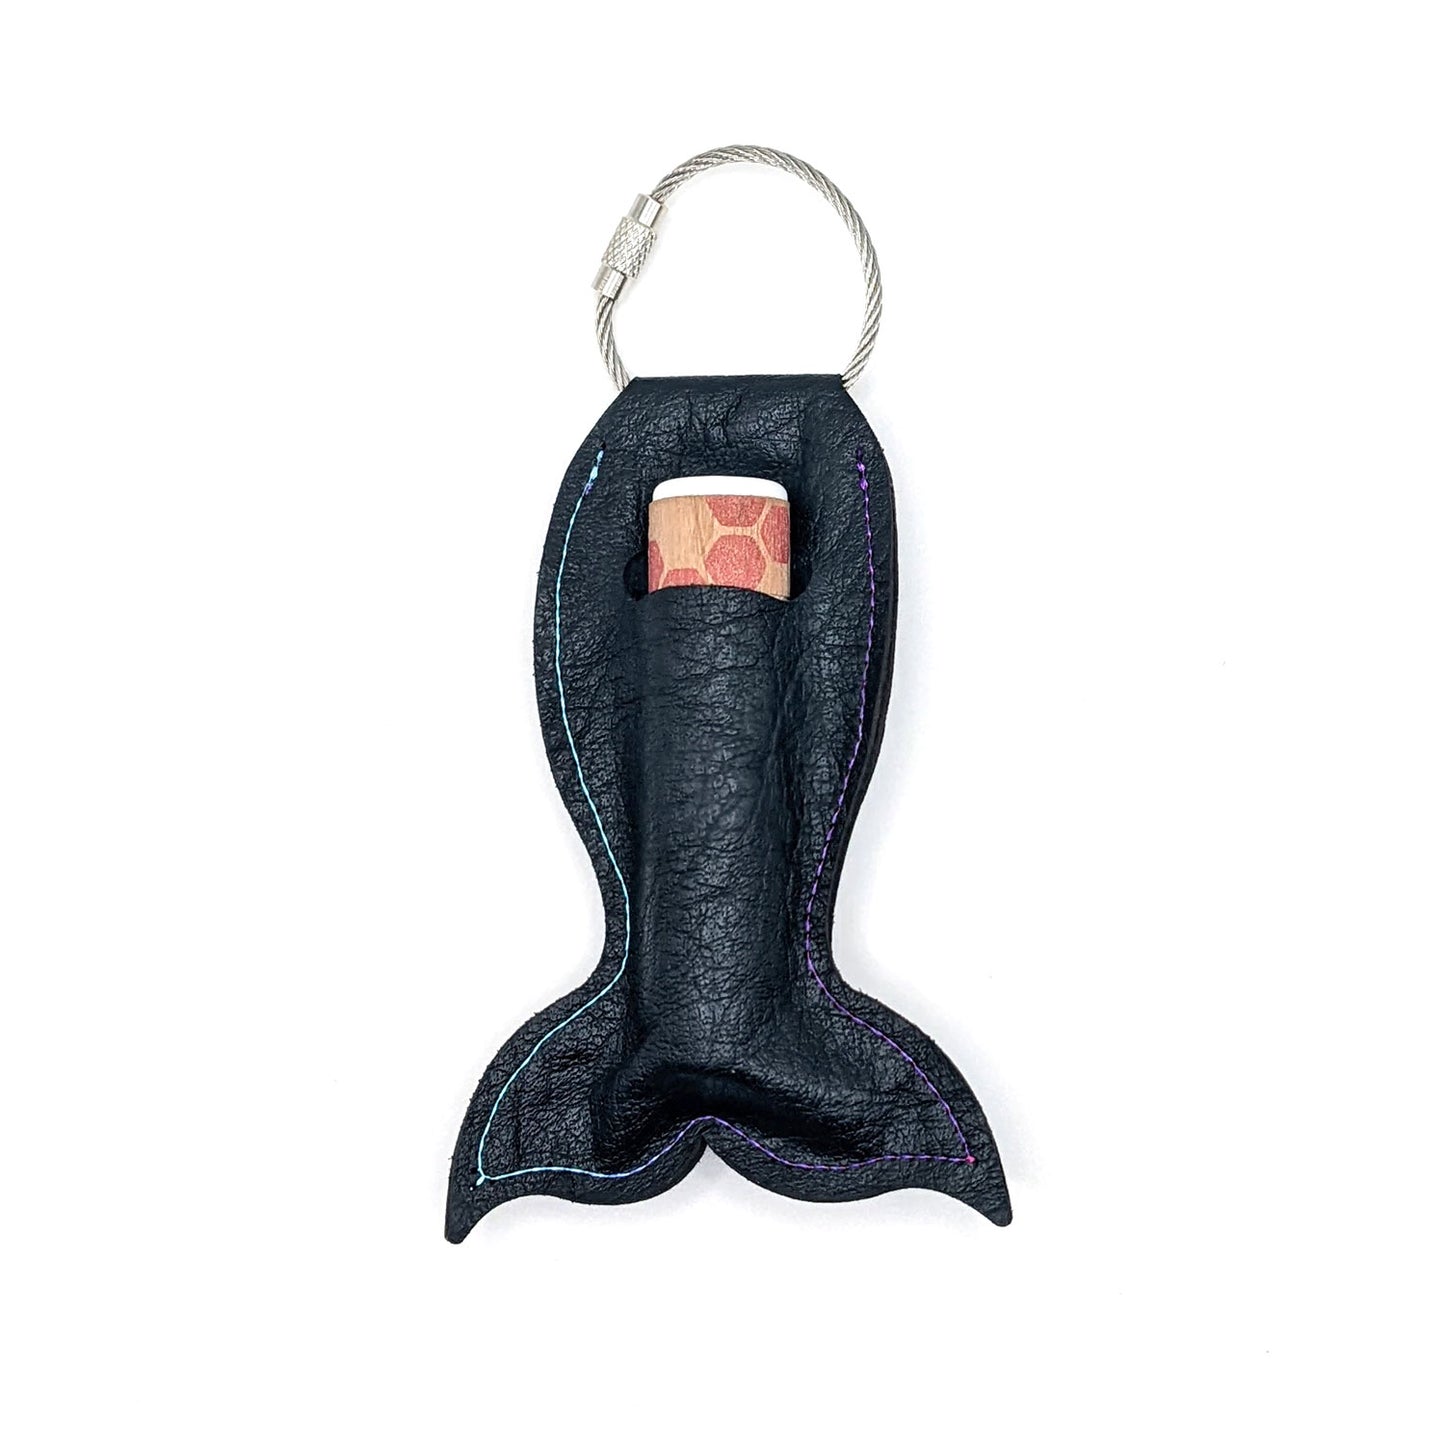 Mermaid Tail Lip Balm Holder Keychain